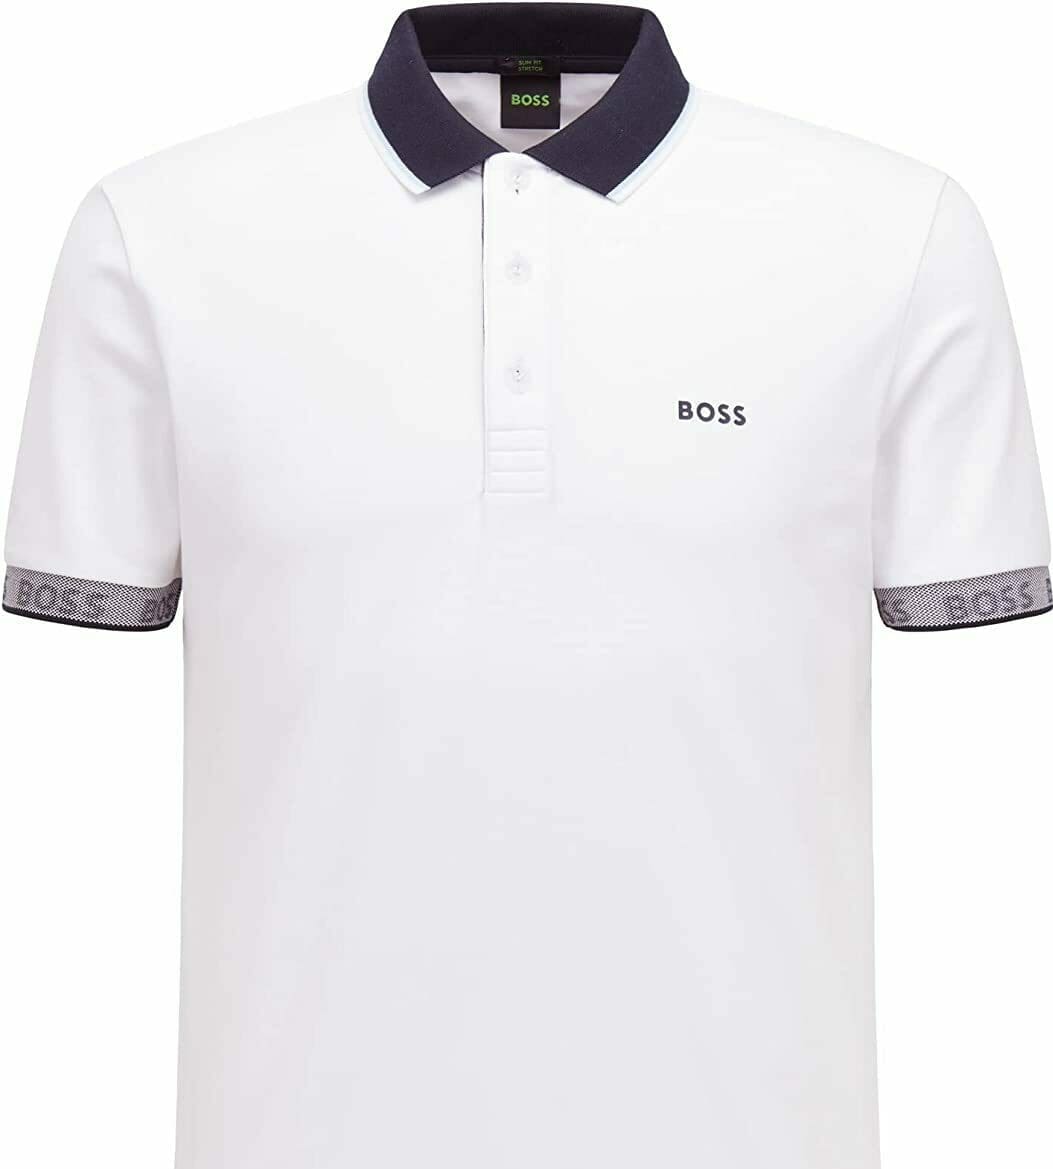 Hugo Boss Paule Golf Polo Shirt (White) - Golf Star Direct | Golf ...